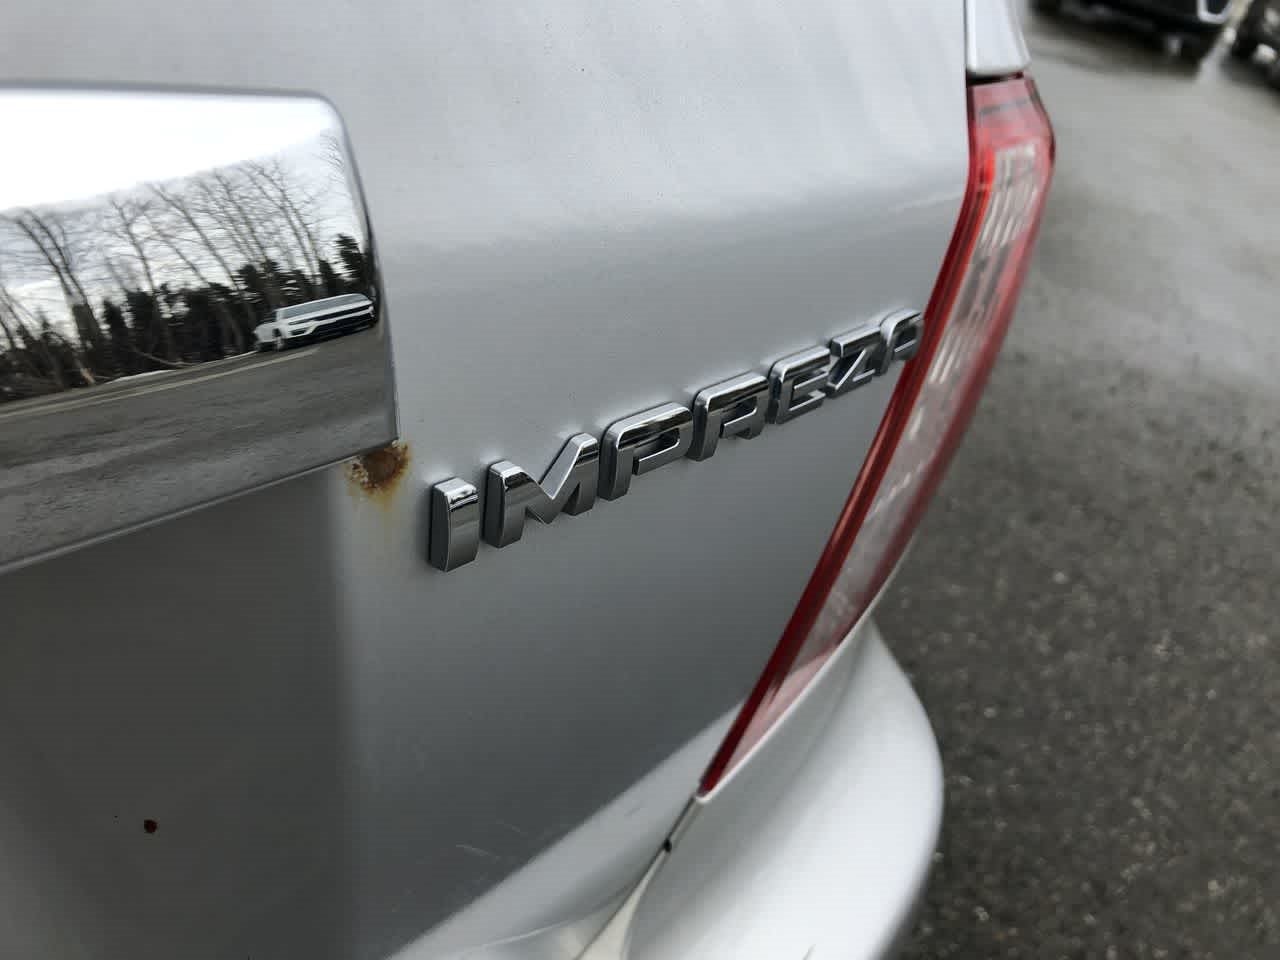 2011 Subaru Impreza 2.5i Premium